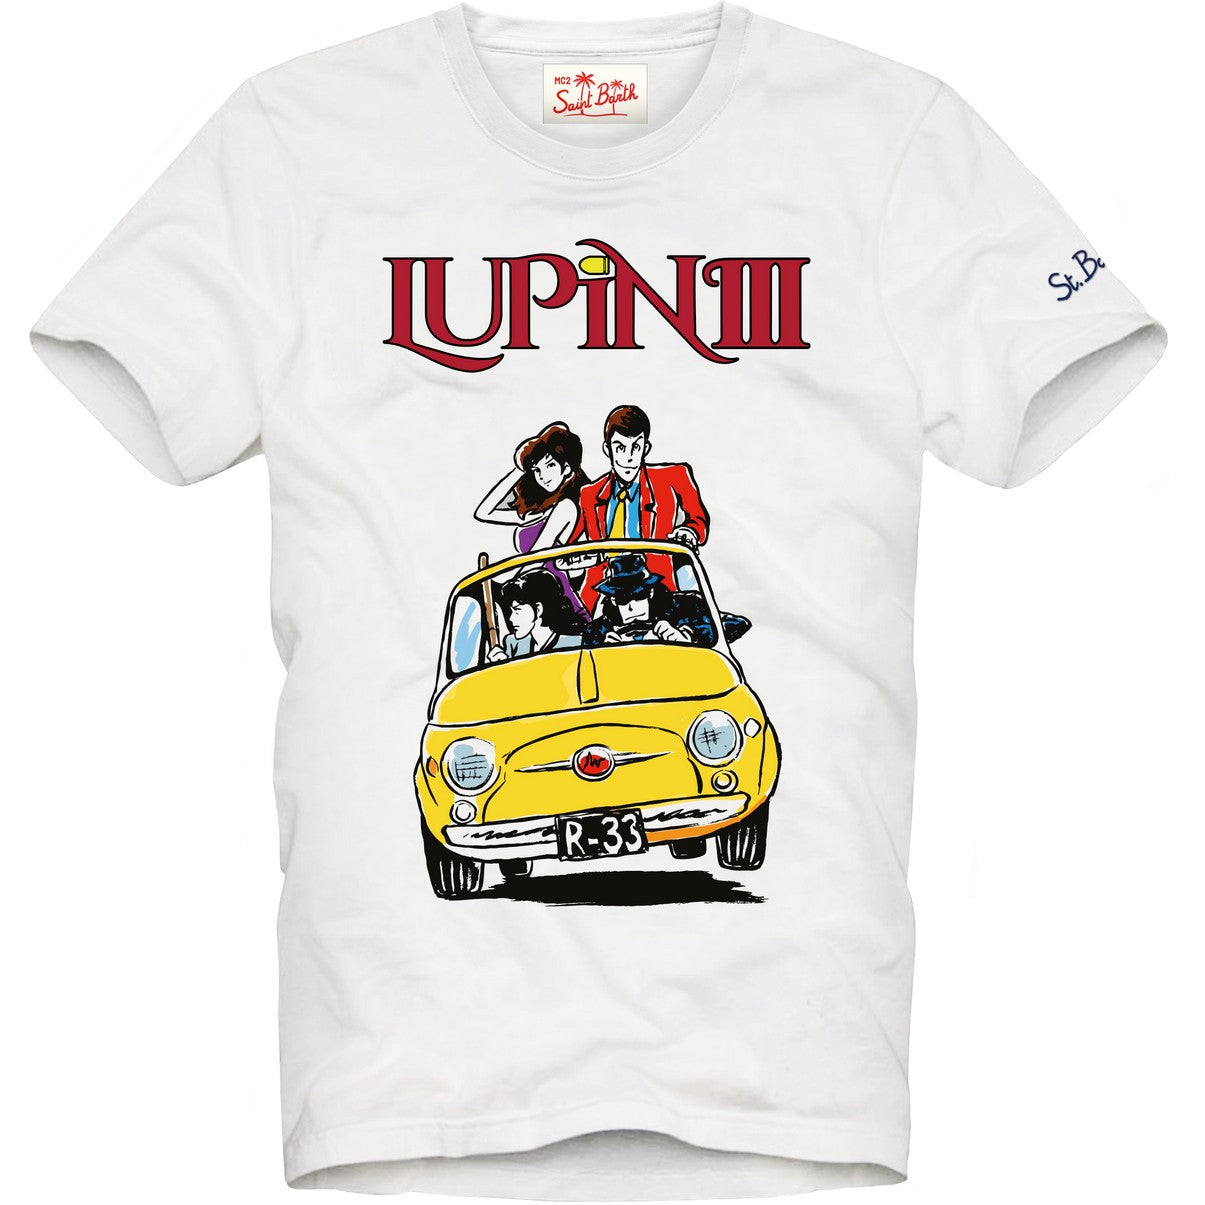 MC2 SAINT BARTH T-Shirt Bambino Classic-Lupin